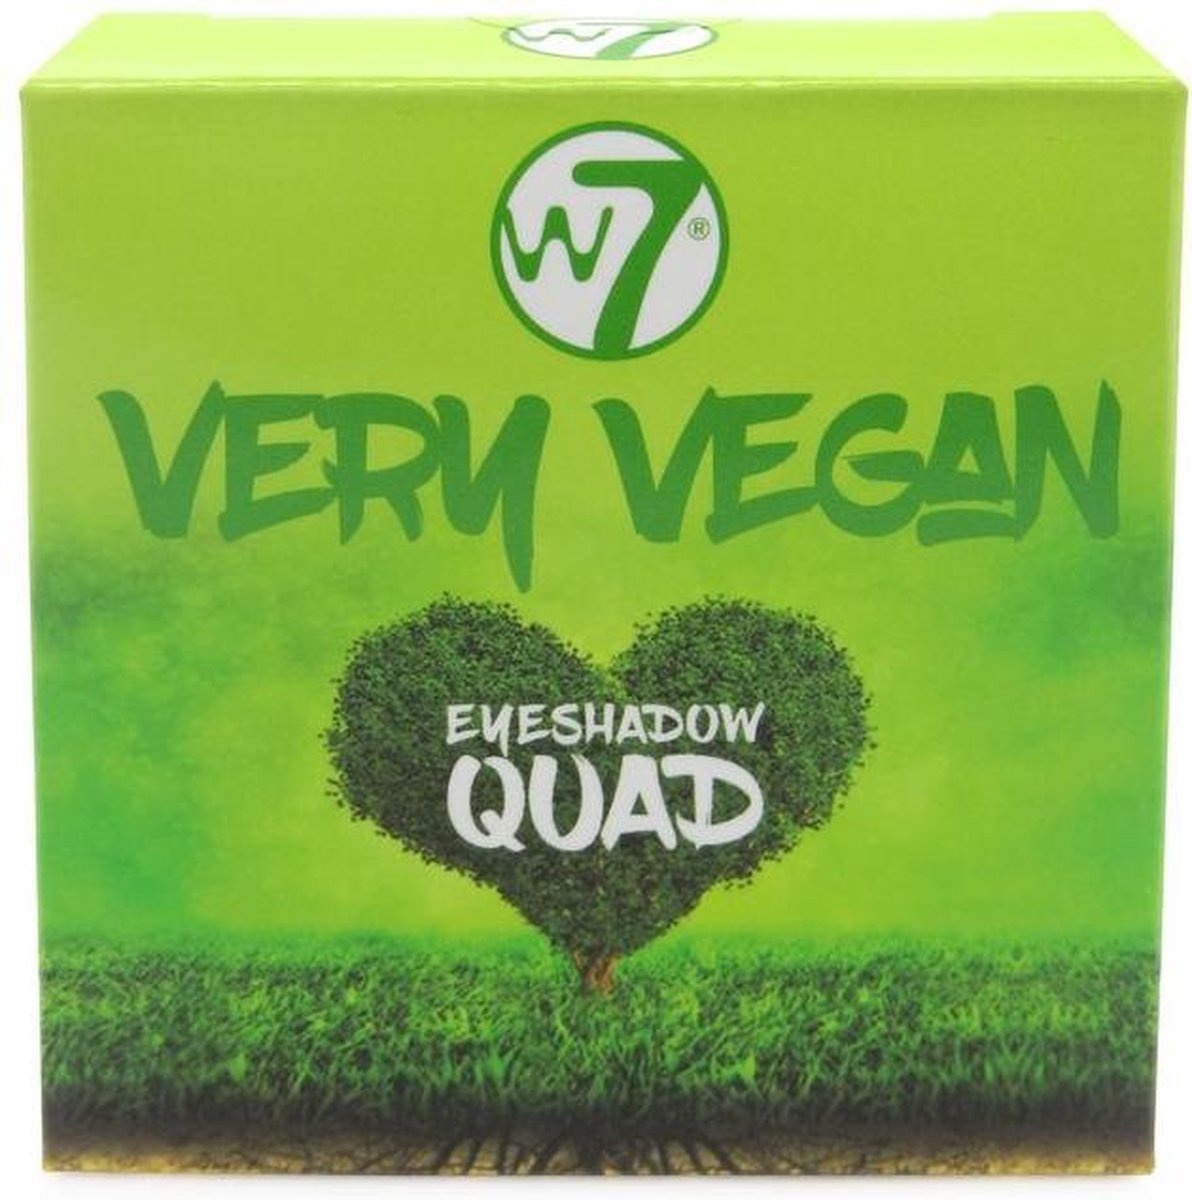 W7 Very Vegan Quad Eyeshadow Spring Spice